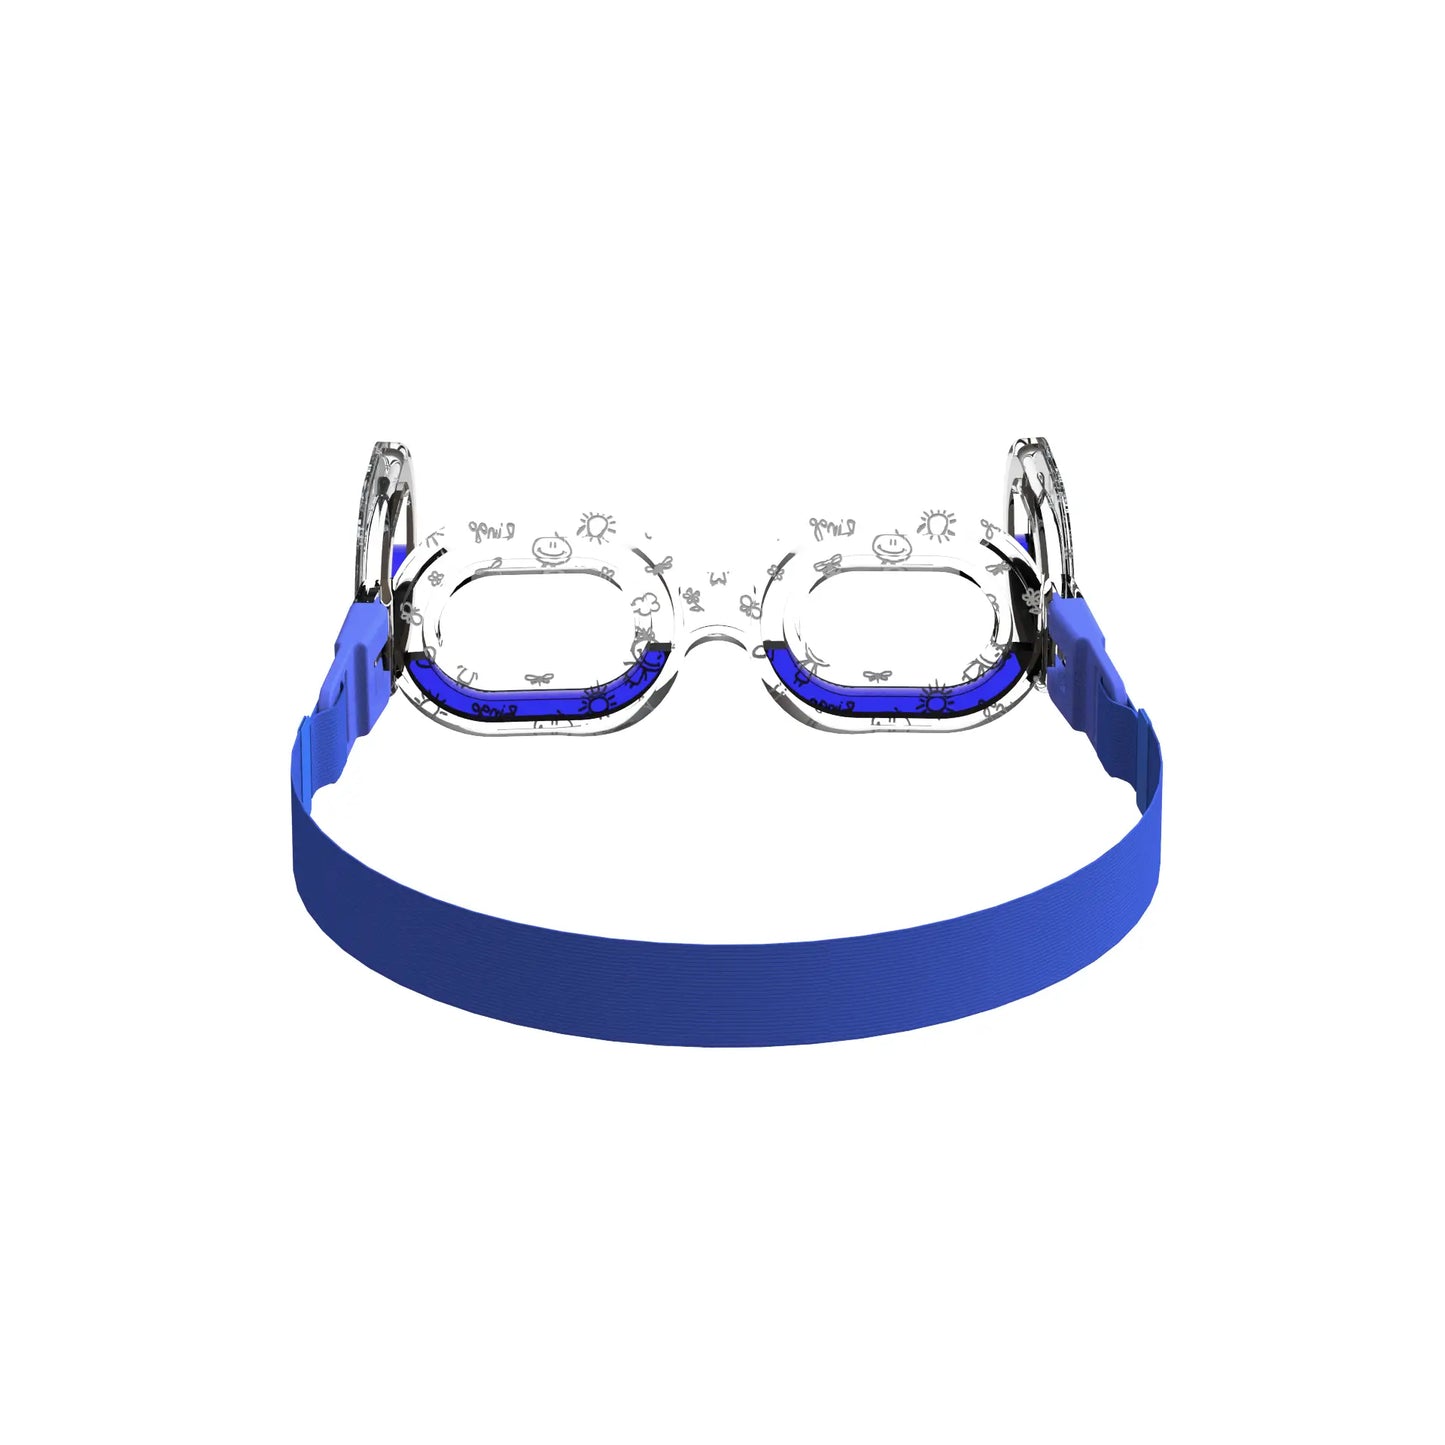 PRE-ORDERS | Ringo - Motion sickness glasses for kids